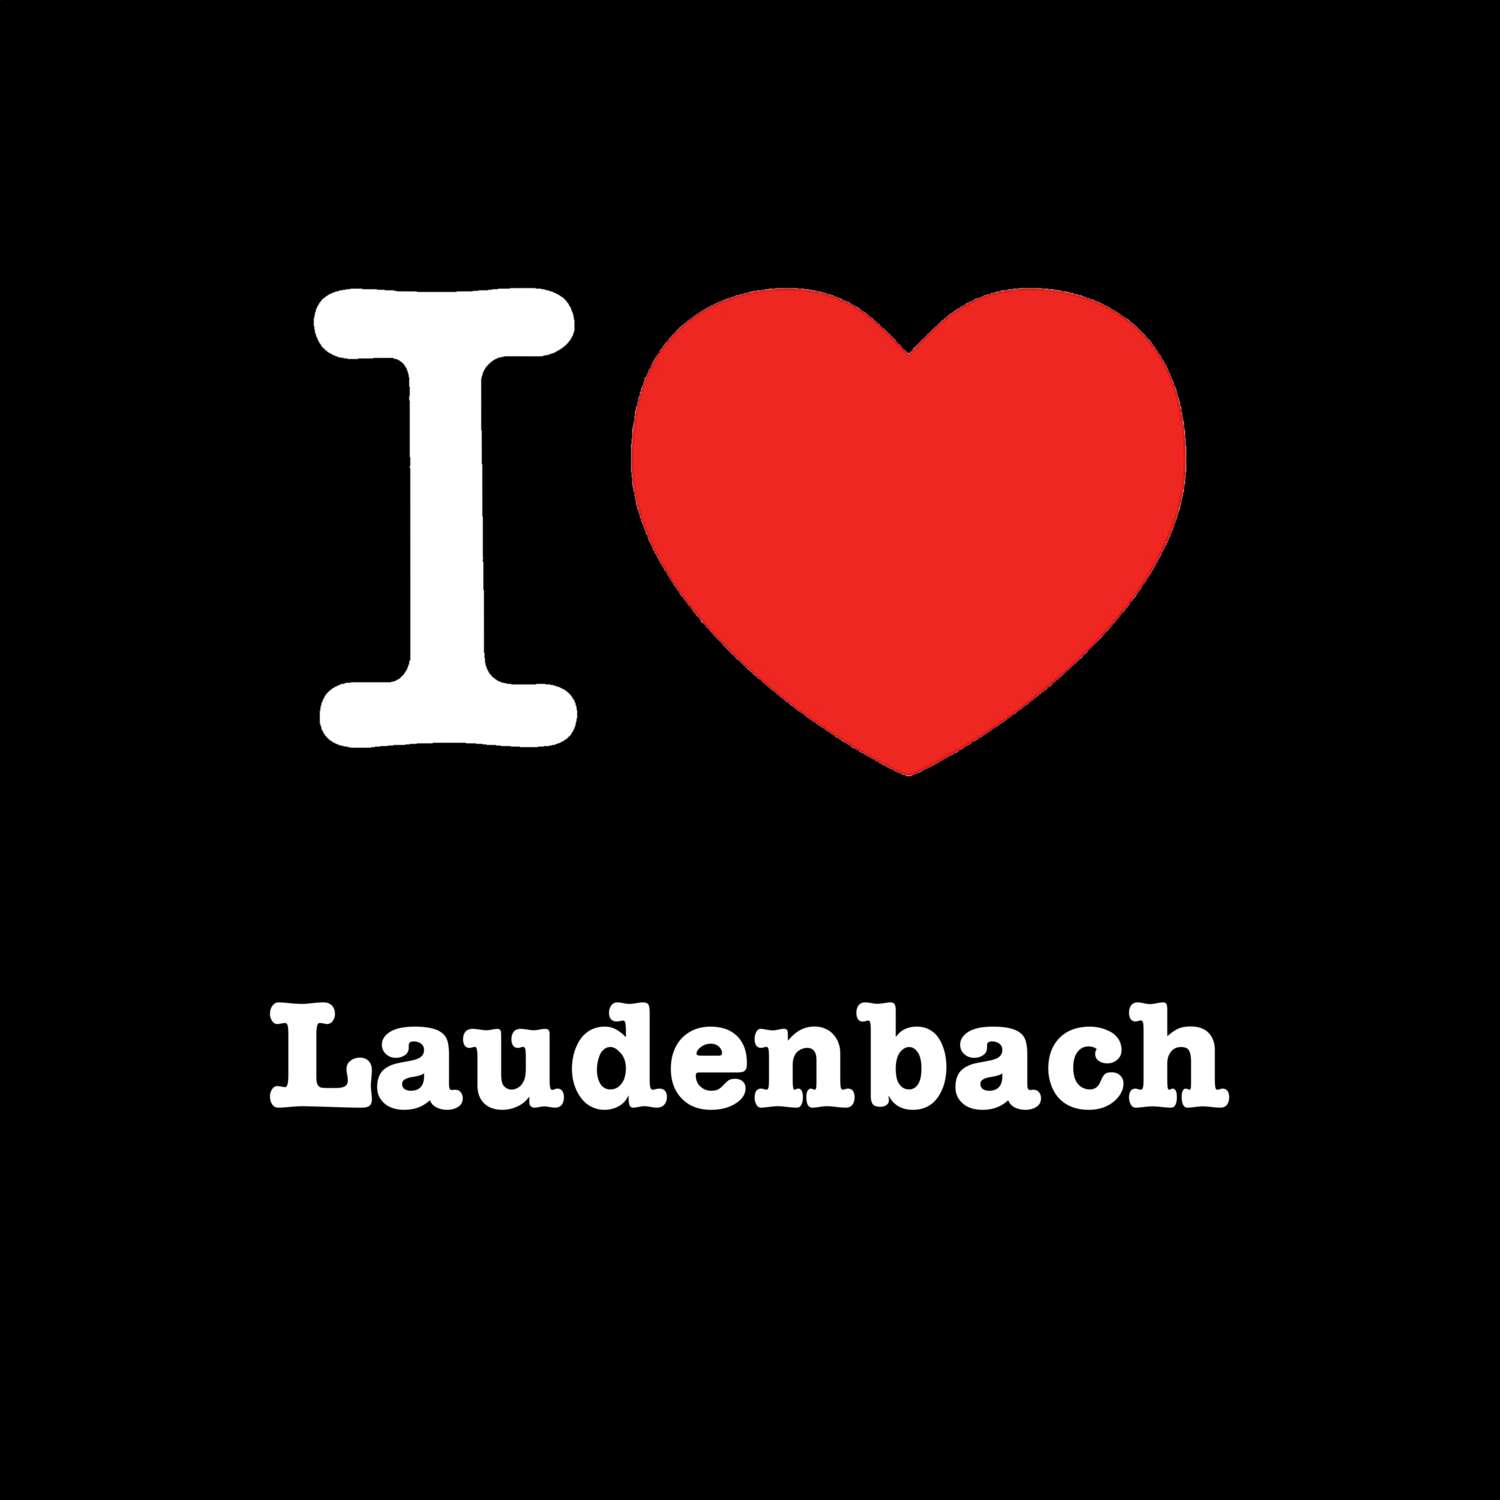 Laudenbach T-Shirt »I love«